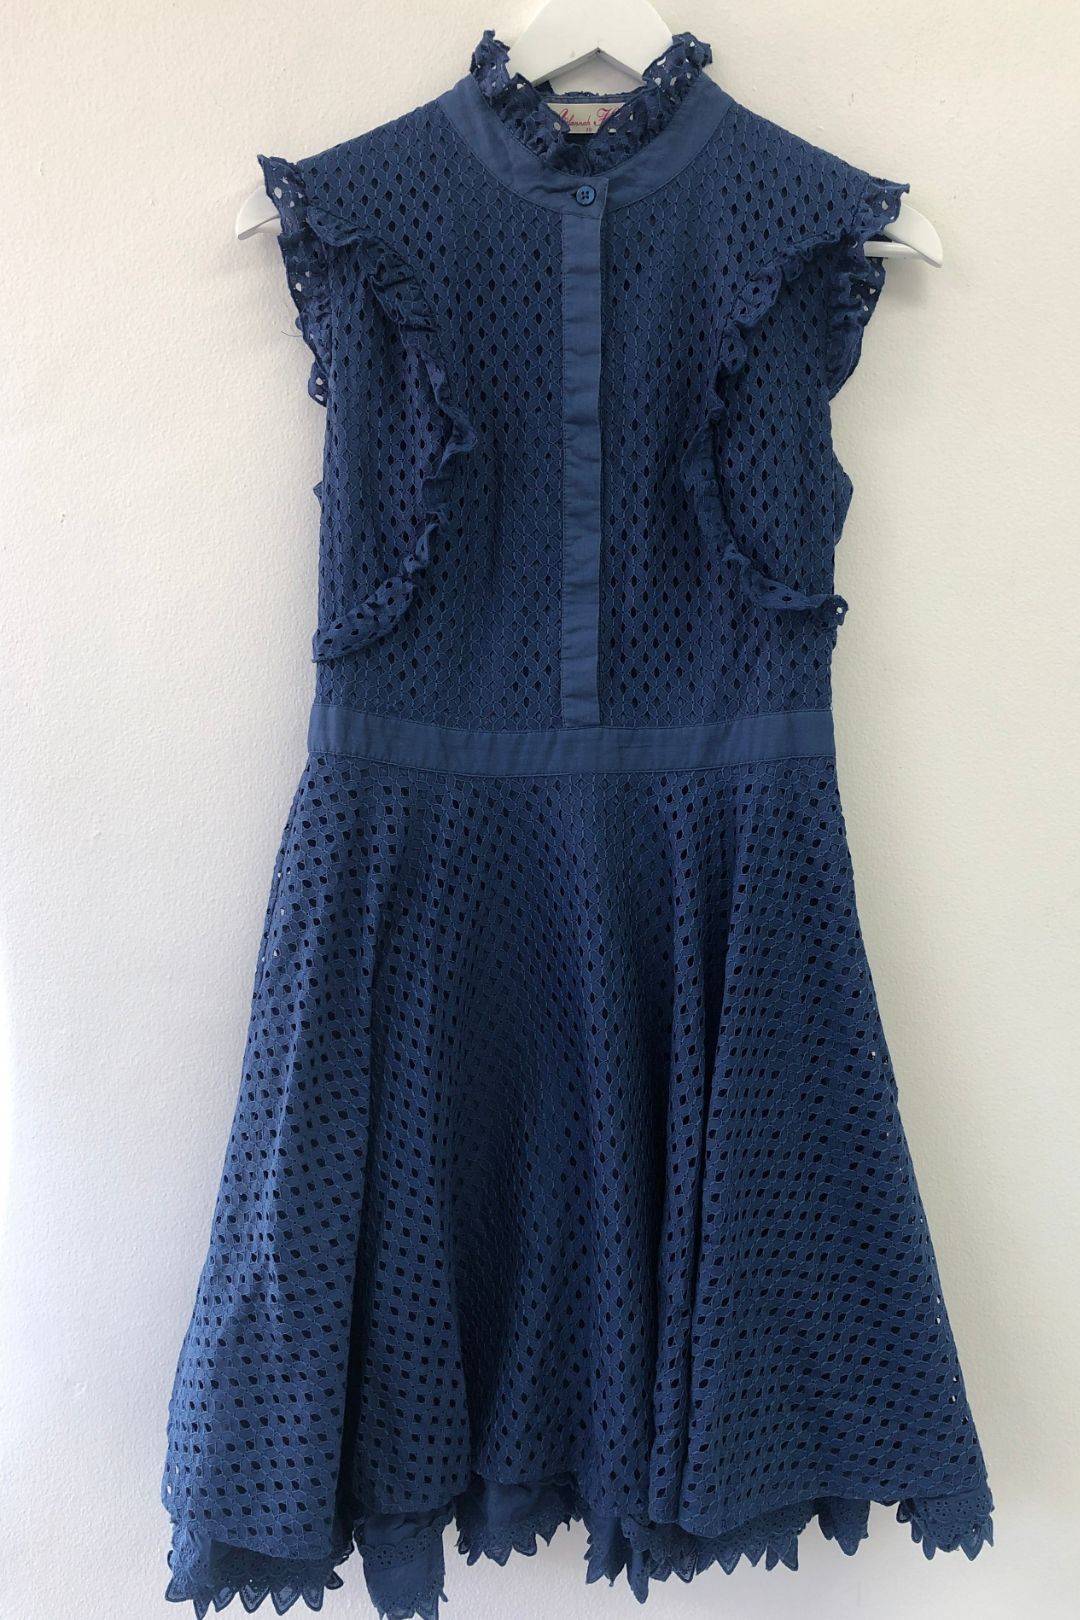 Alannah Hill - Blue Lace Diamond Pattern Dress